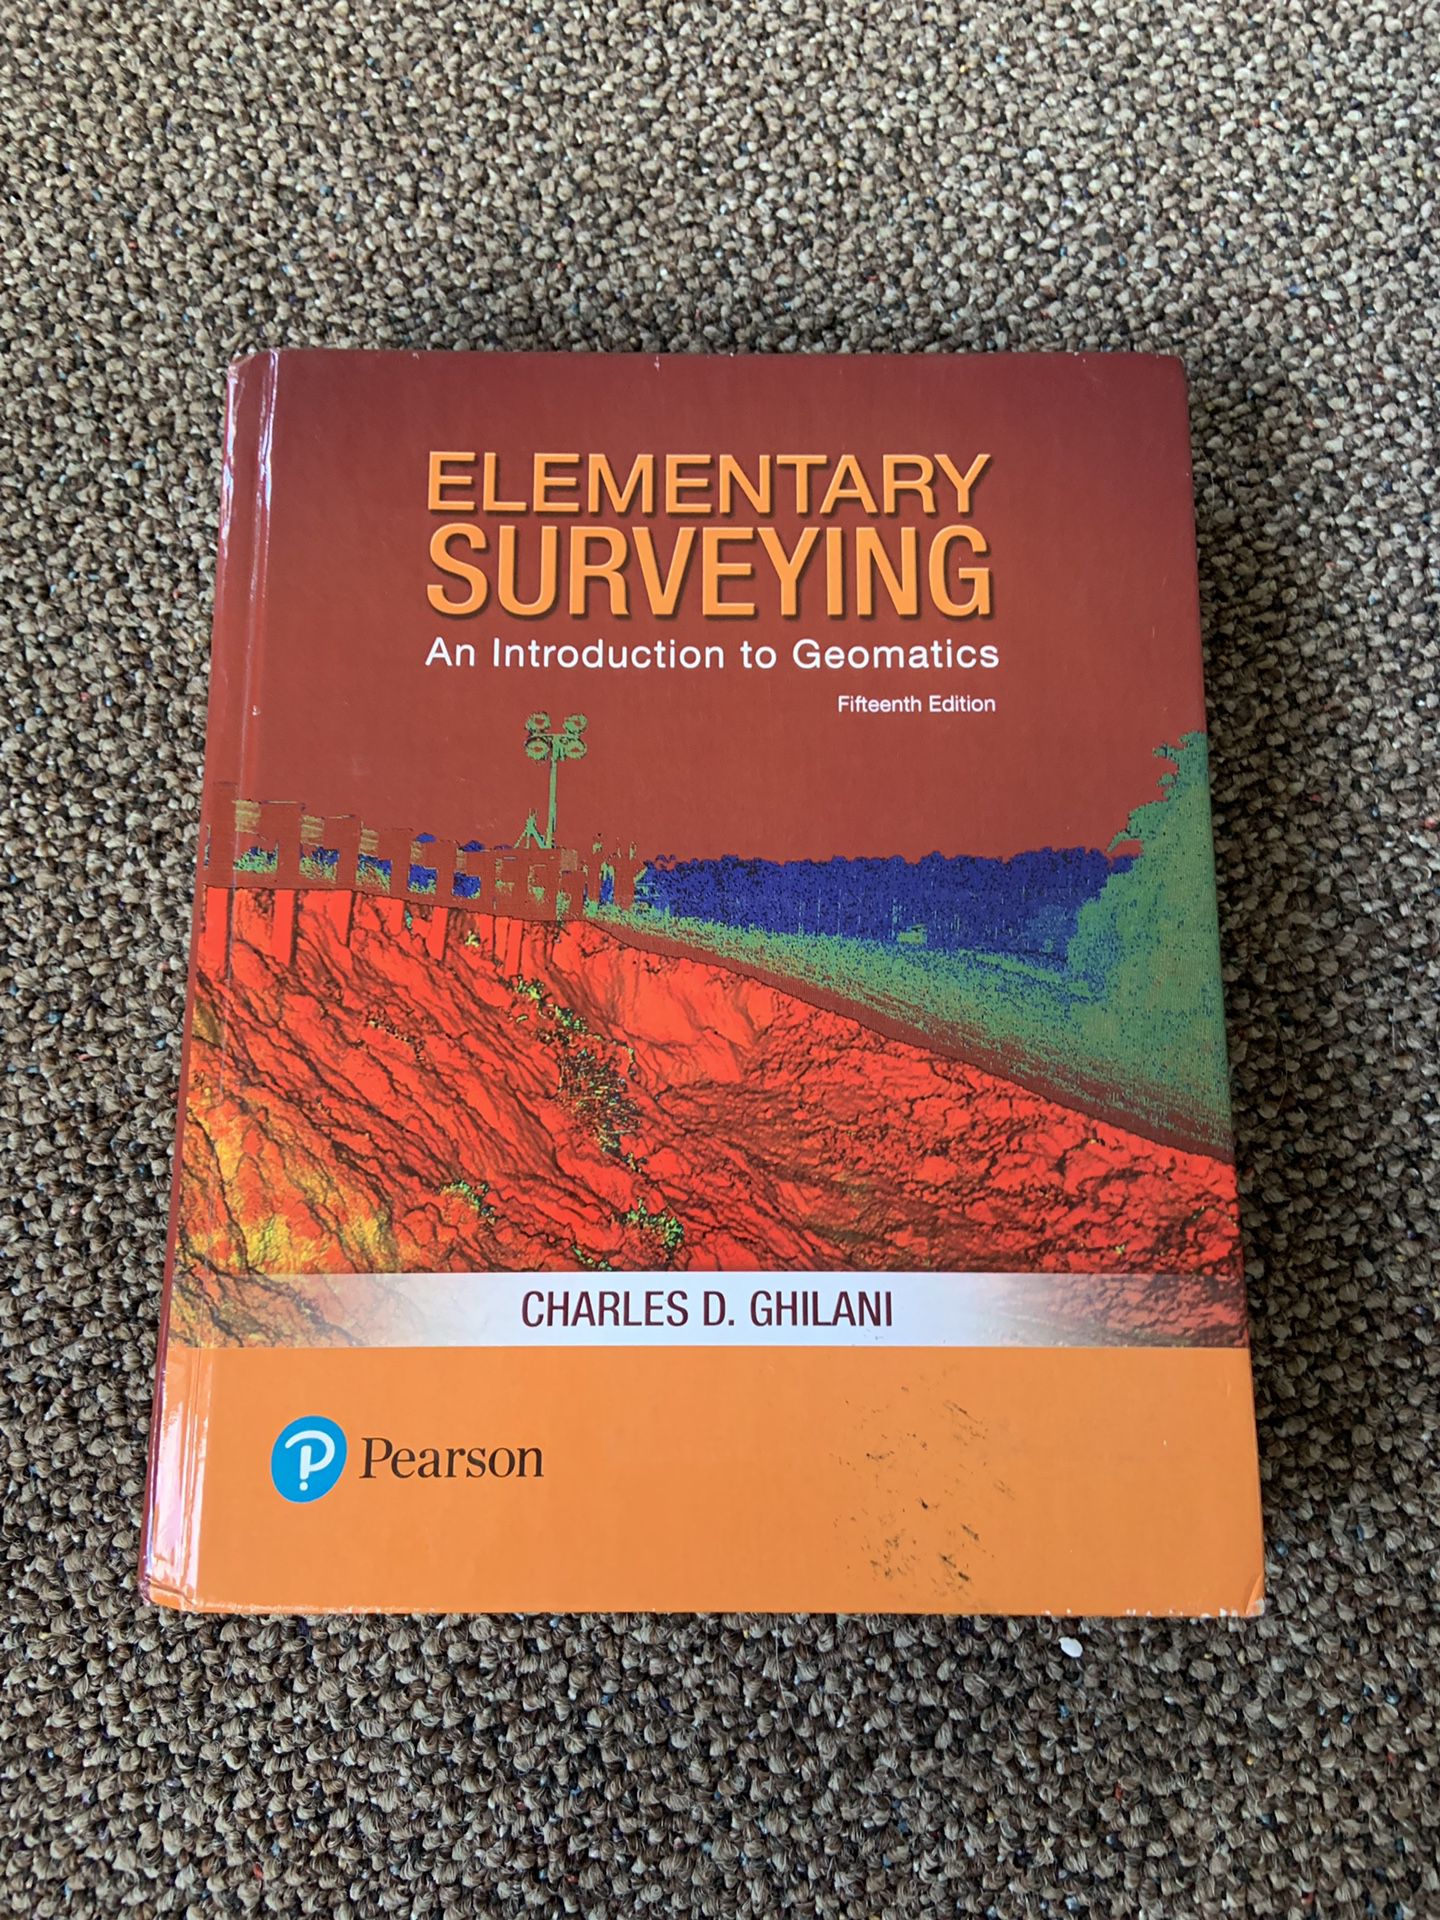 Elementary Surveying Geomatics 15th edition